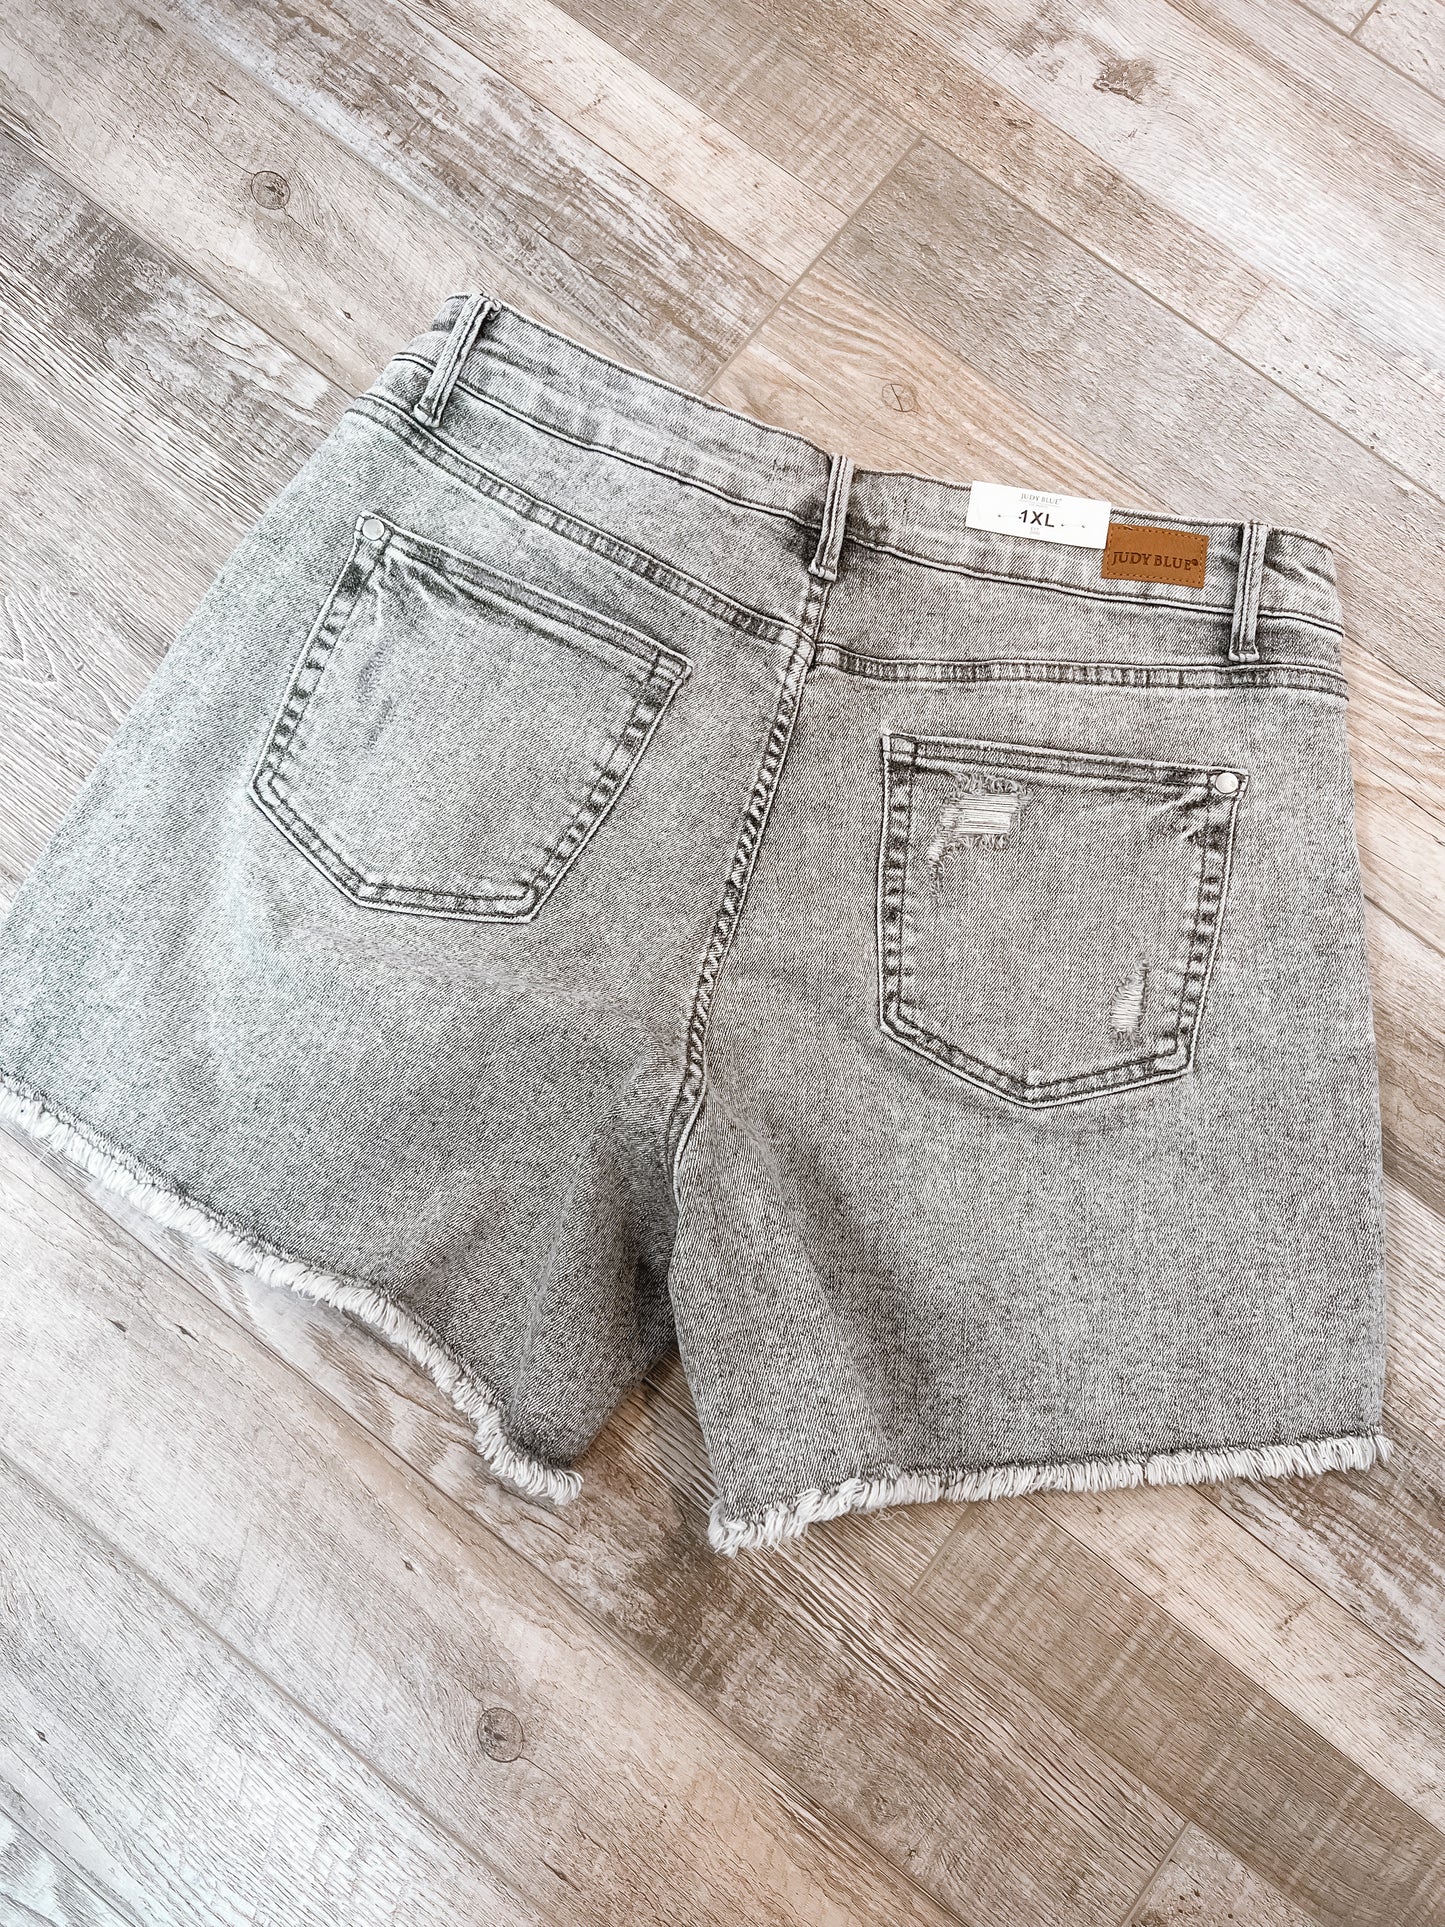 Shades of Grey Denim Shorts